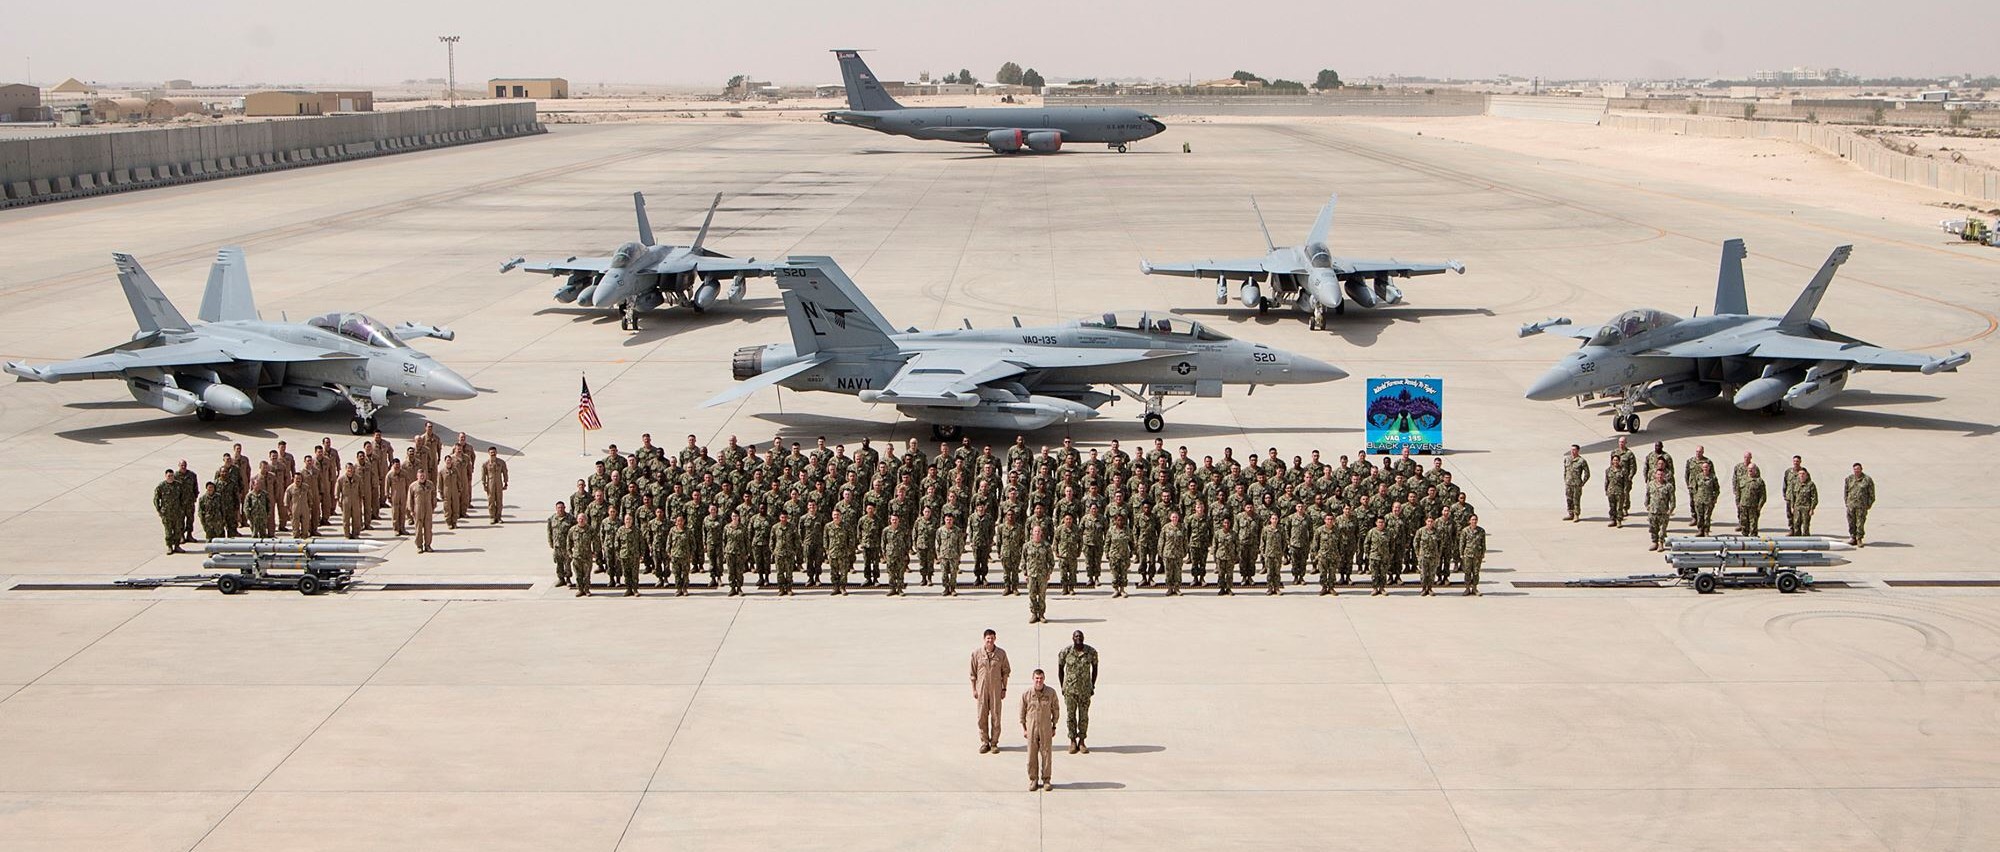 vaq-135 black ravens electronic attack squadron vaqron us navy boeing ea-18g growler al udeid air base qatar 56